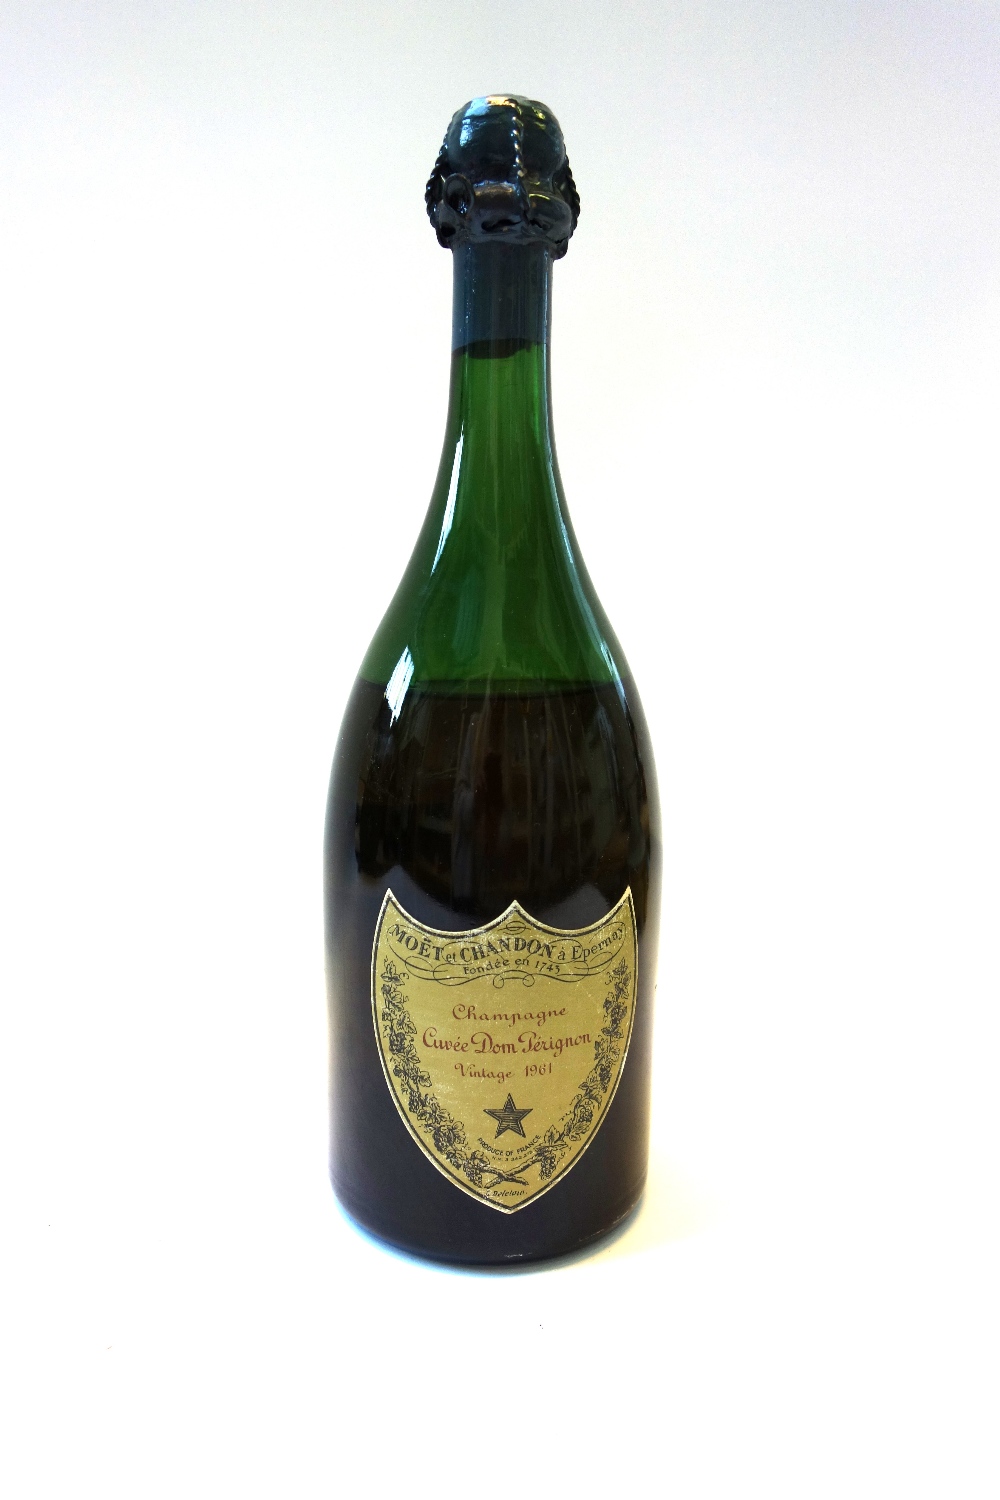 One bottle of Dom Perignon 1961 vintage champagne (level at shoulders).